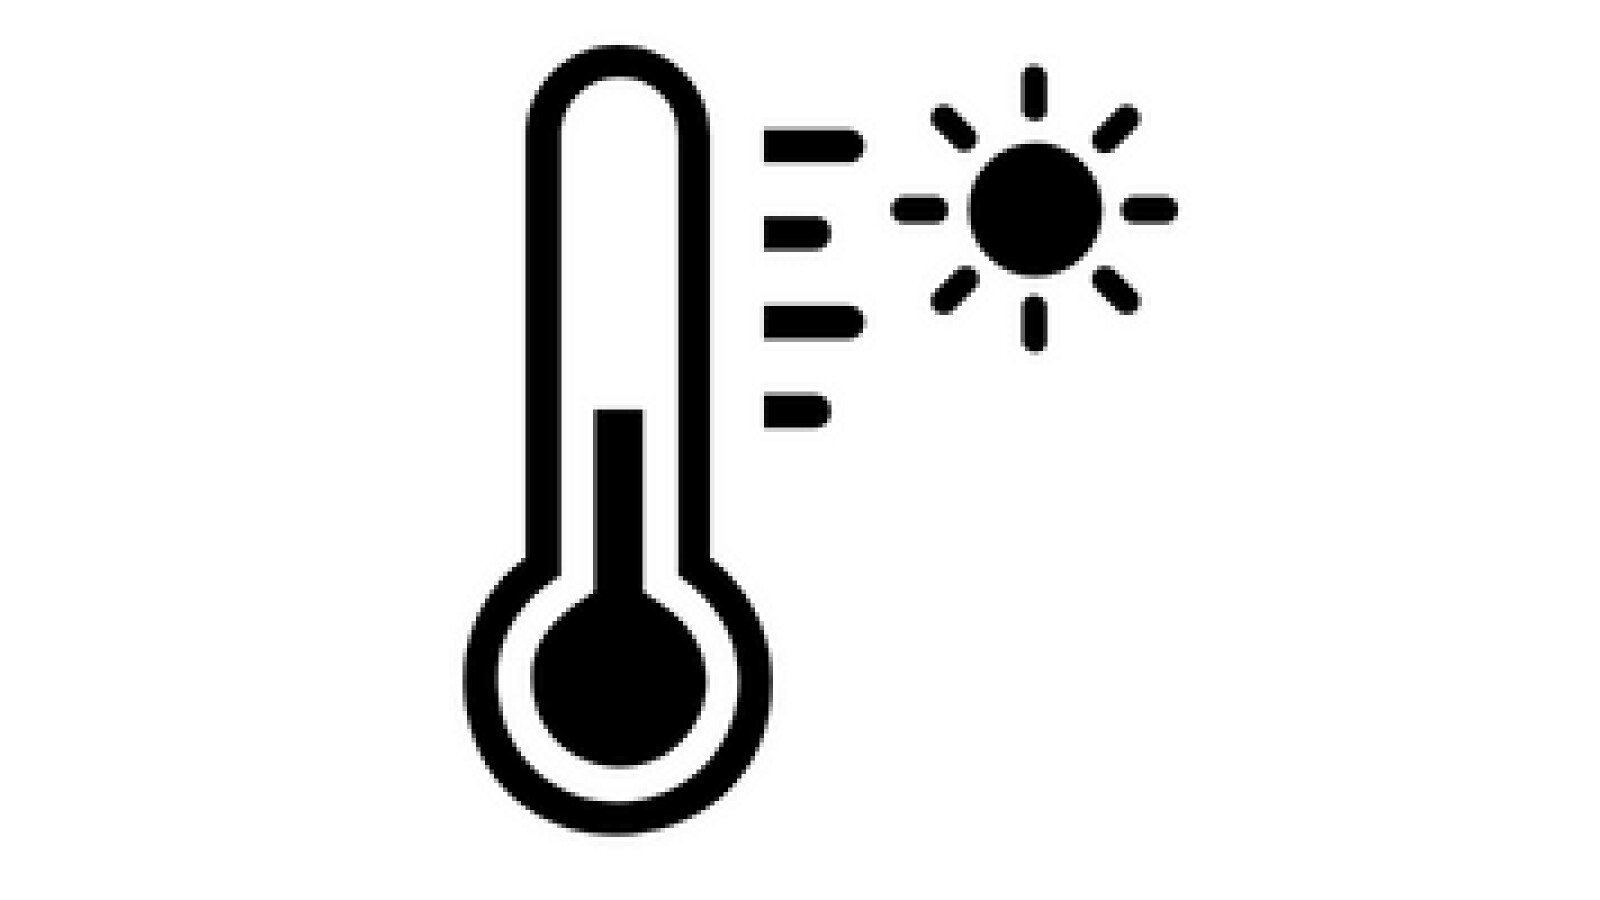 Environment temperature and ventilation